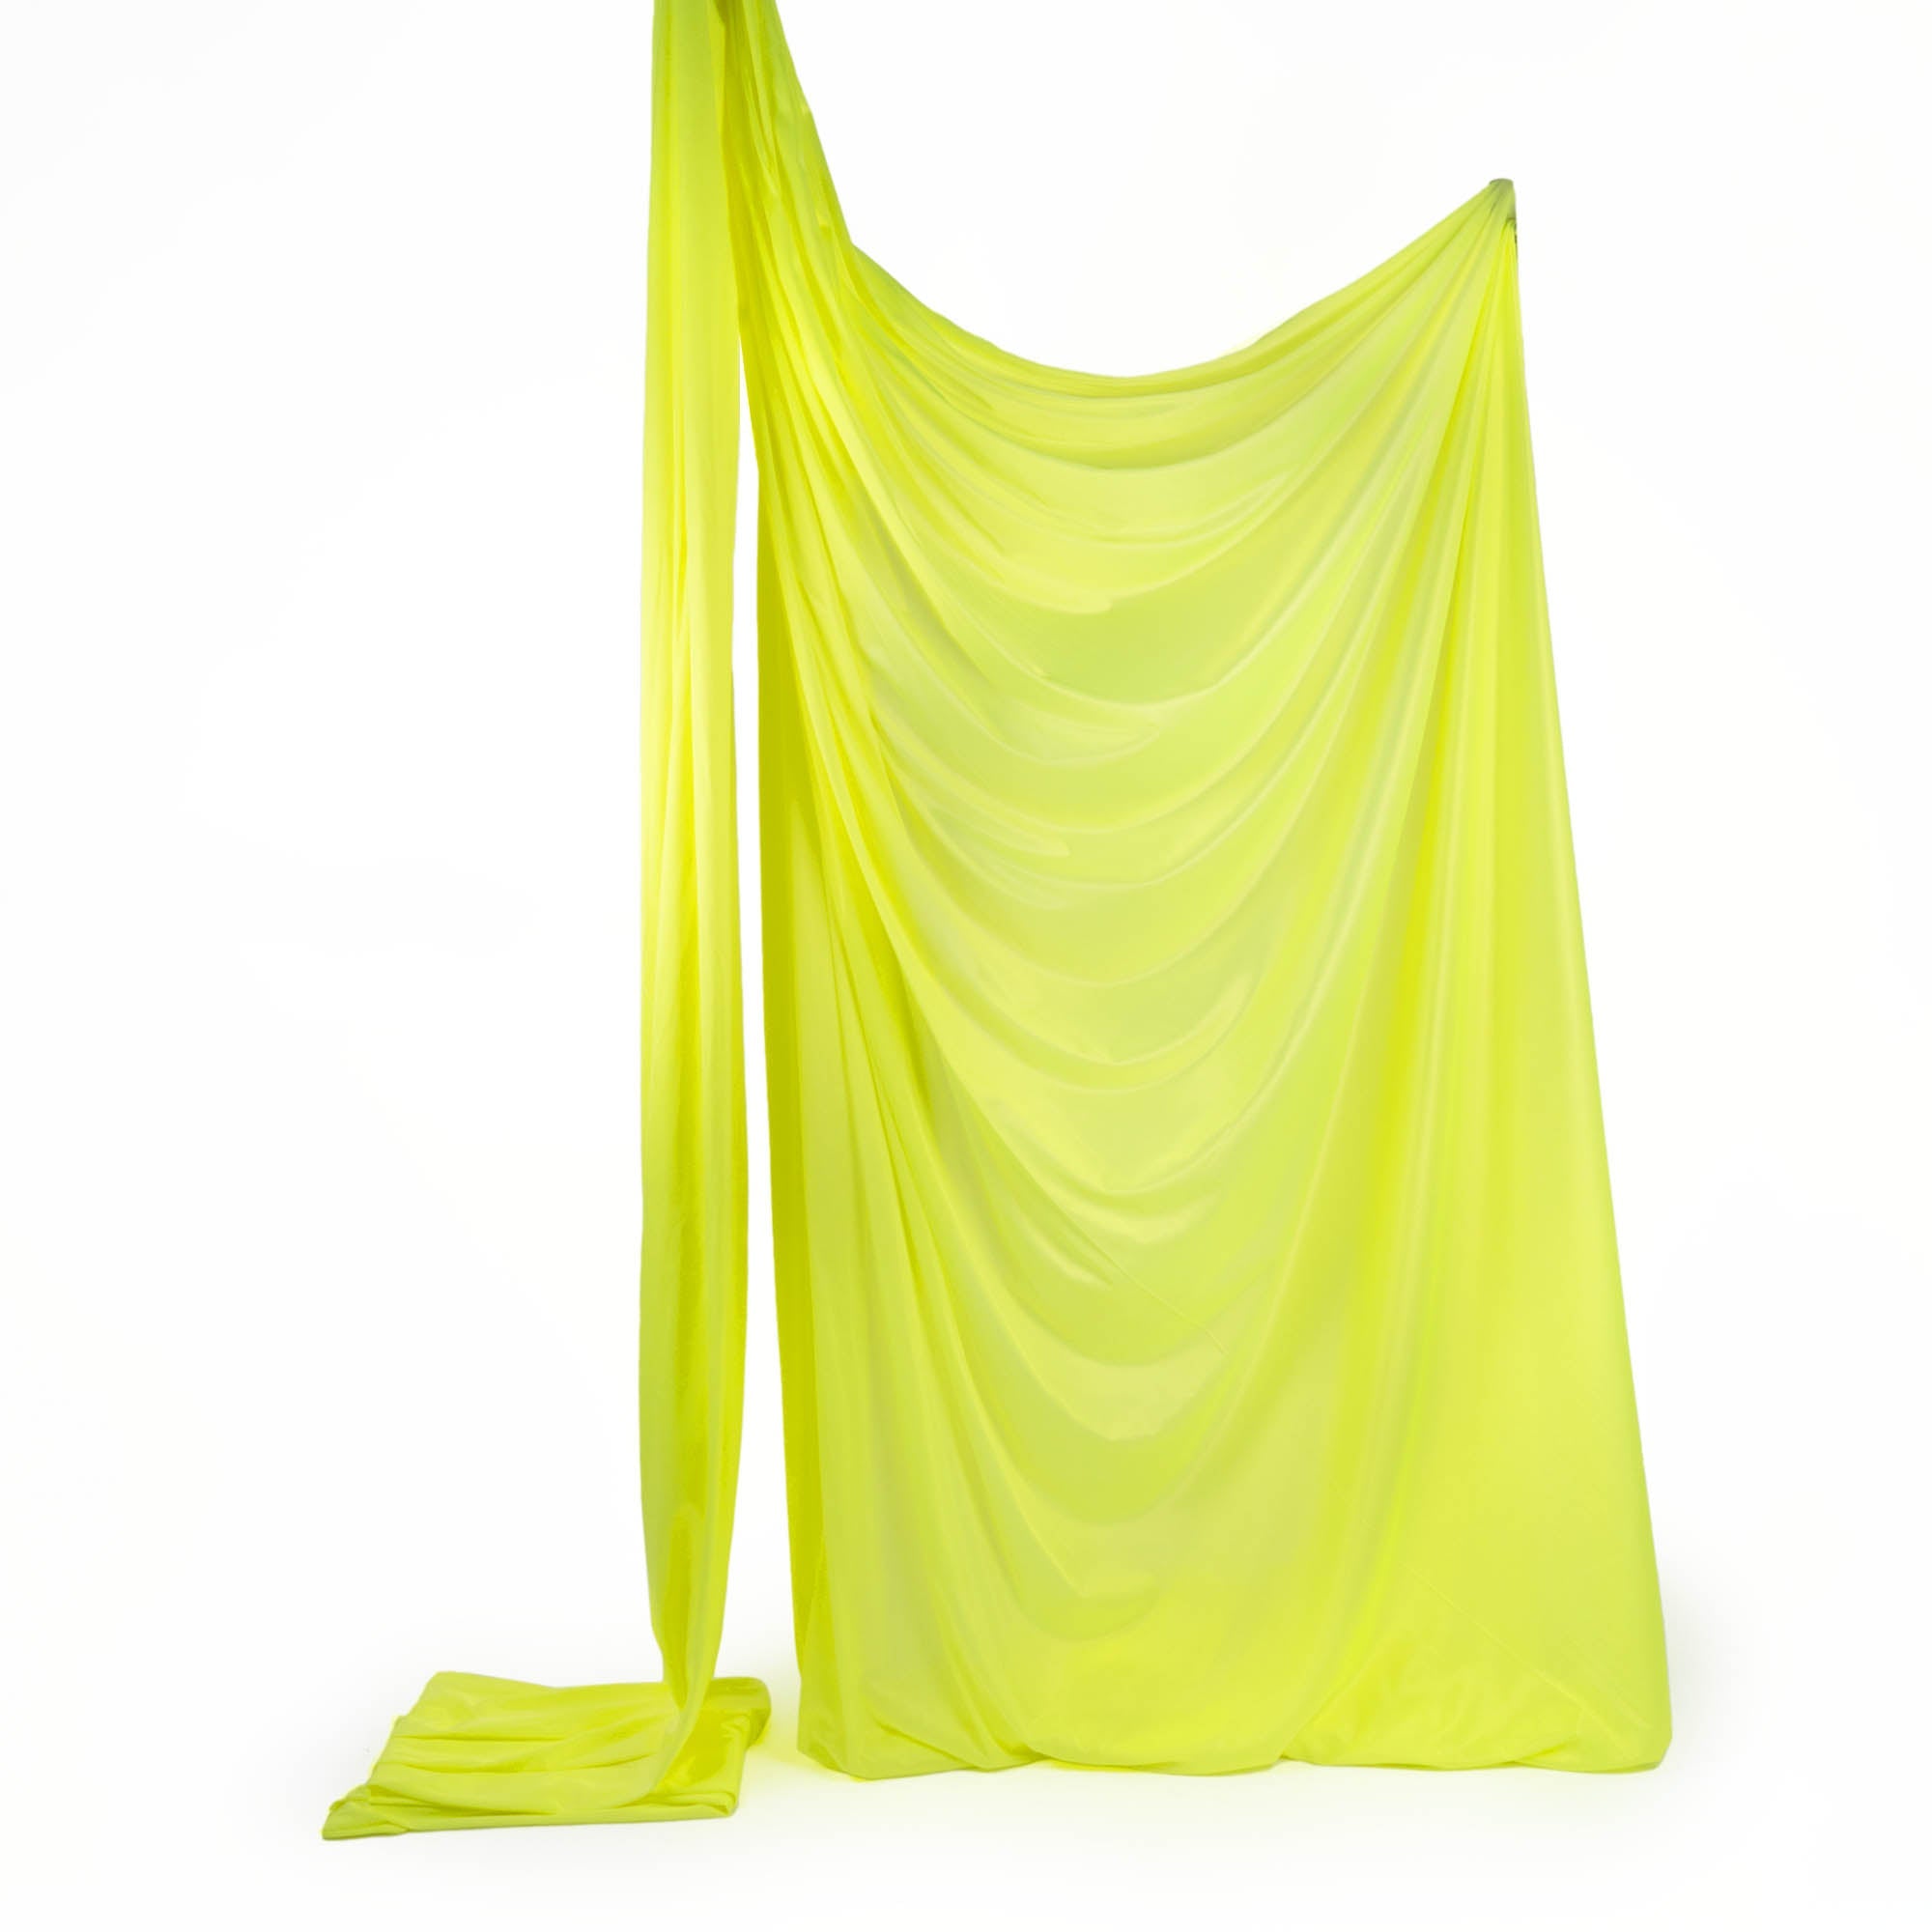 Neon yellow silk rigged